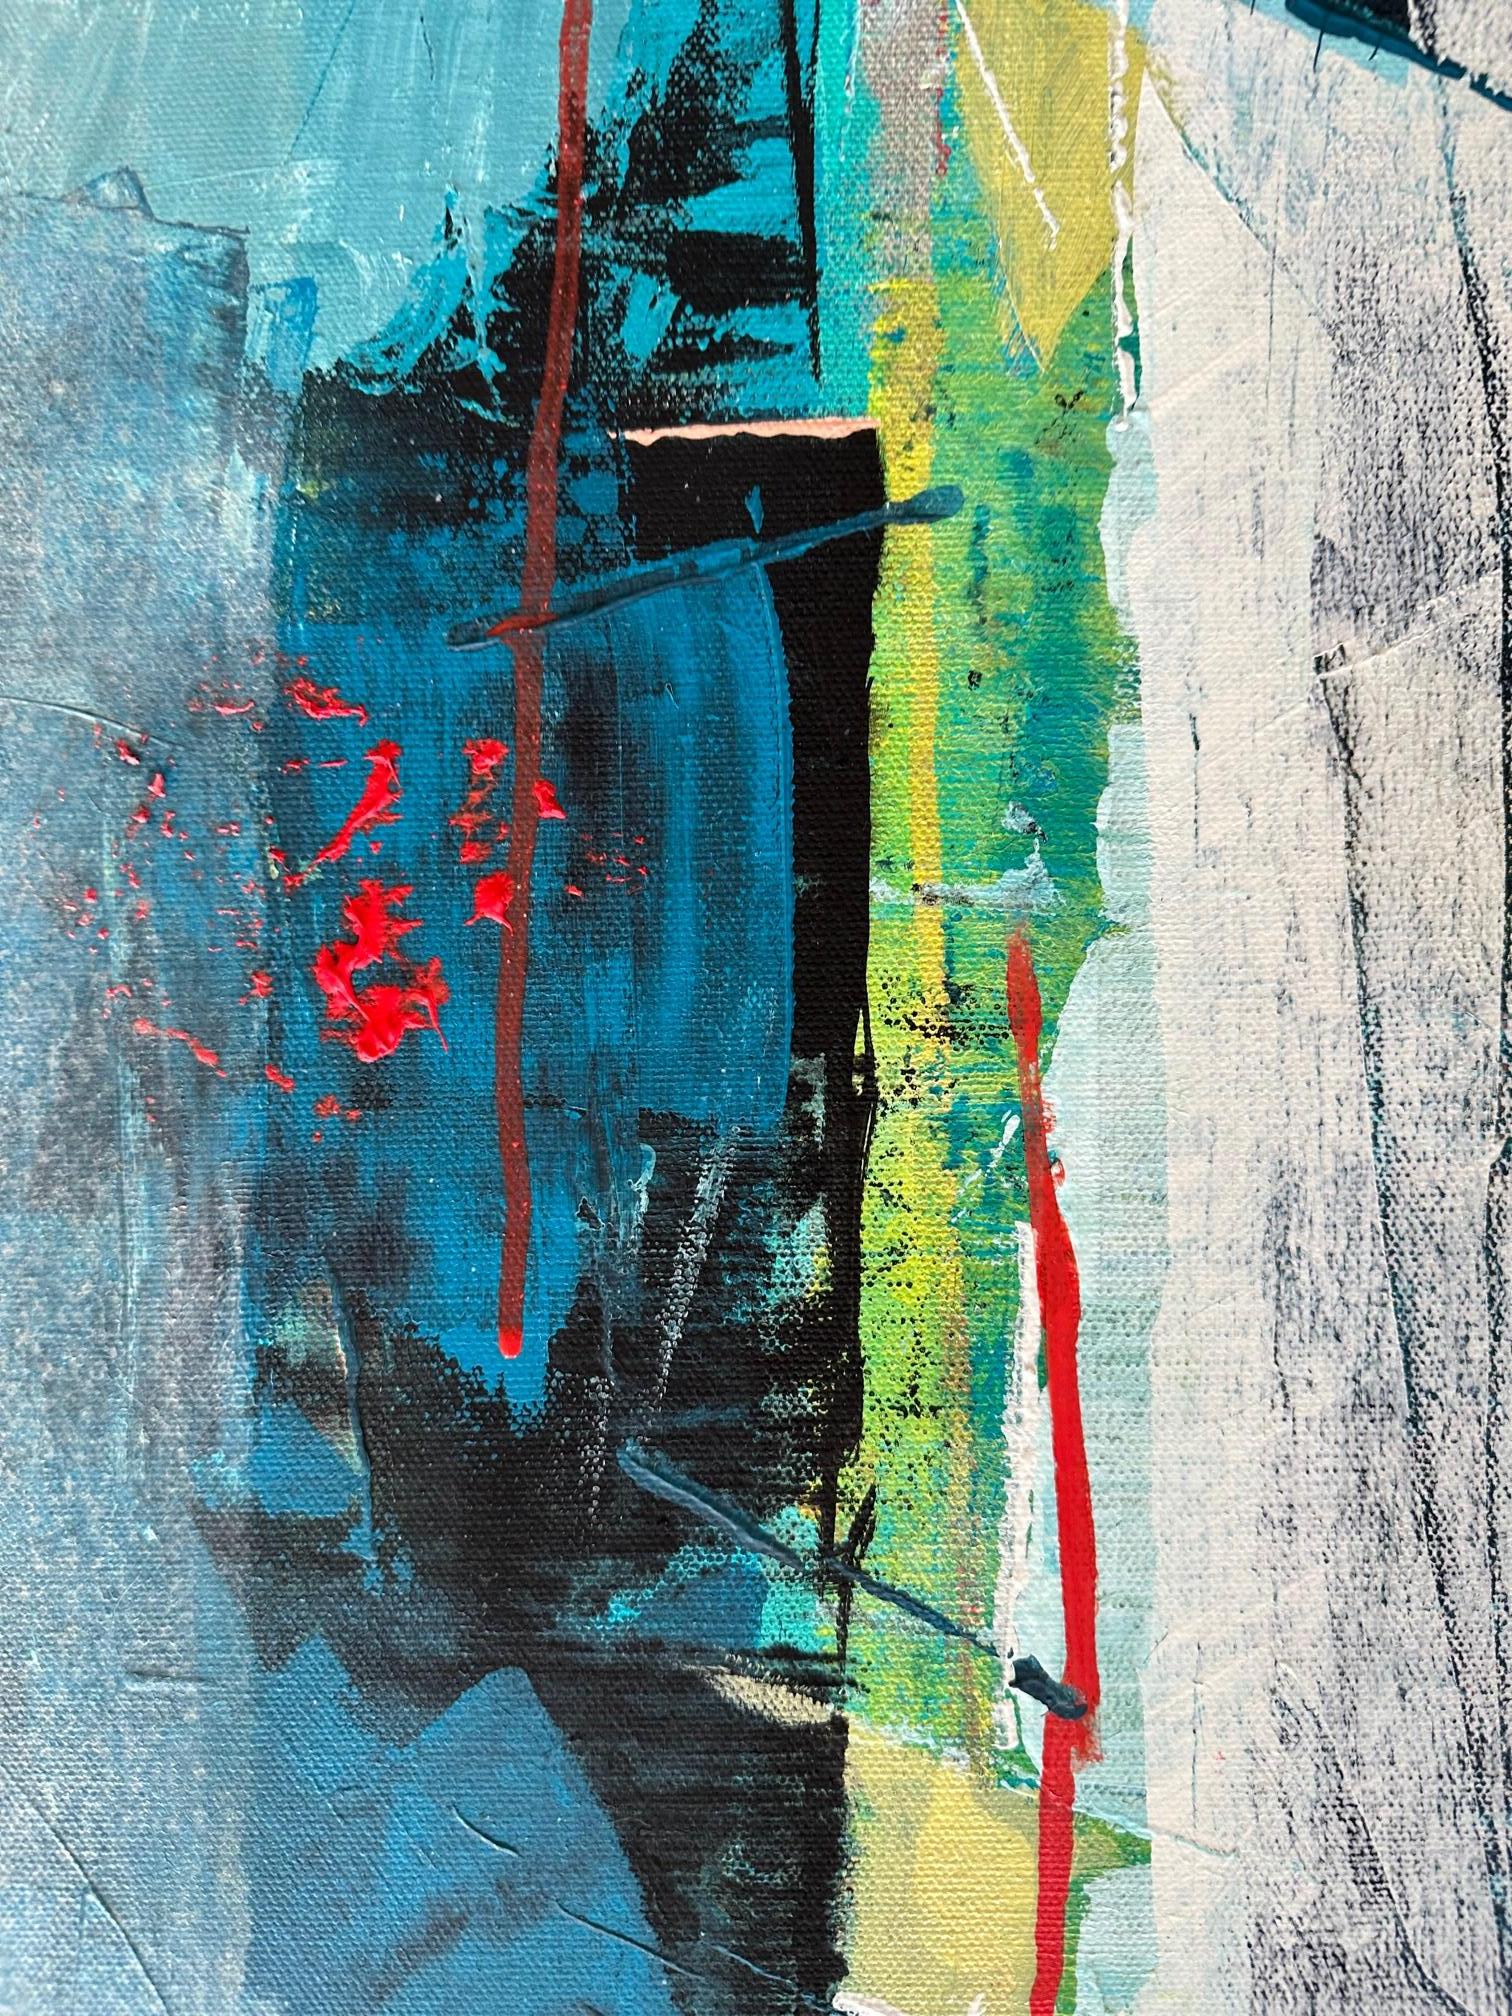 Plain 2 - Oya Bolgun - Abstract Painting - Mixed Media For Sale 2